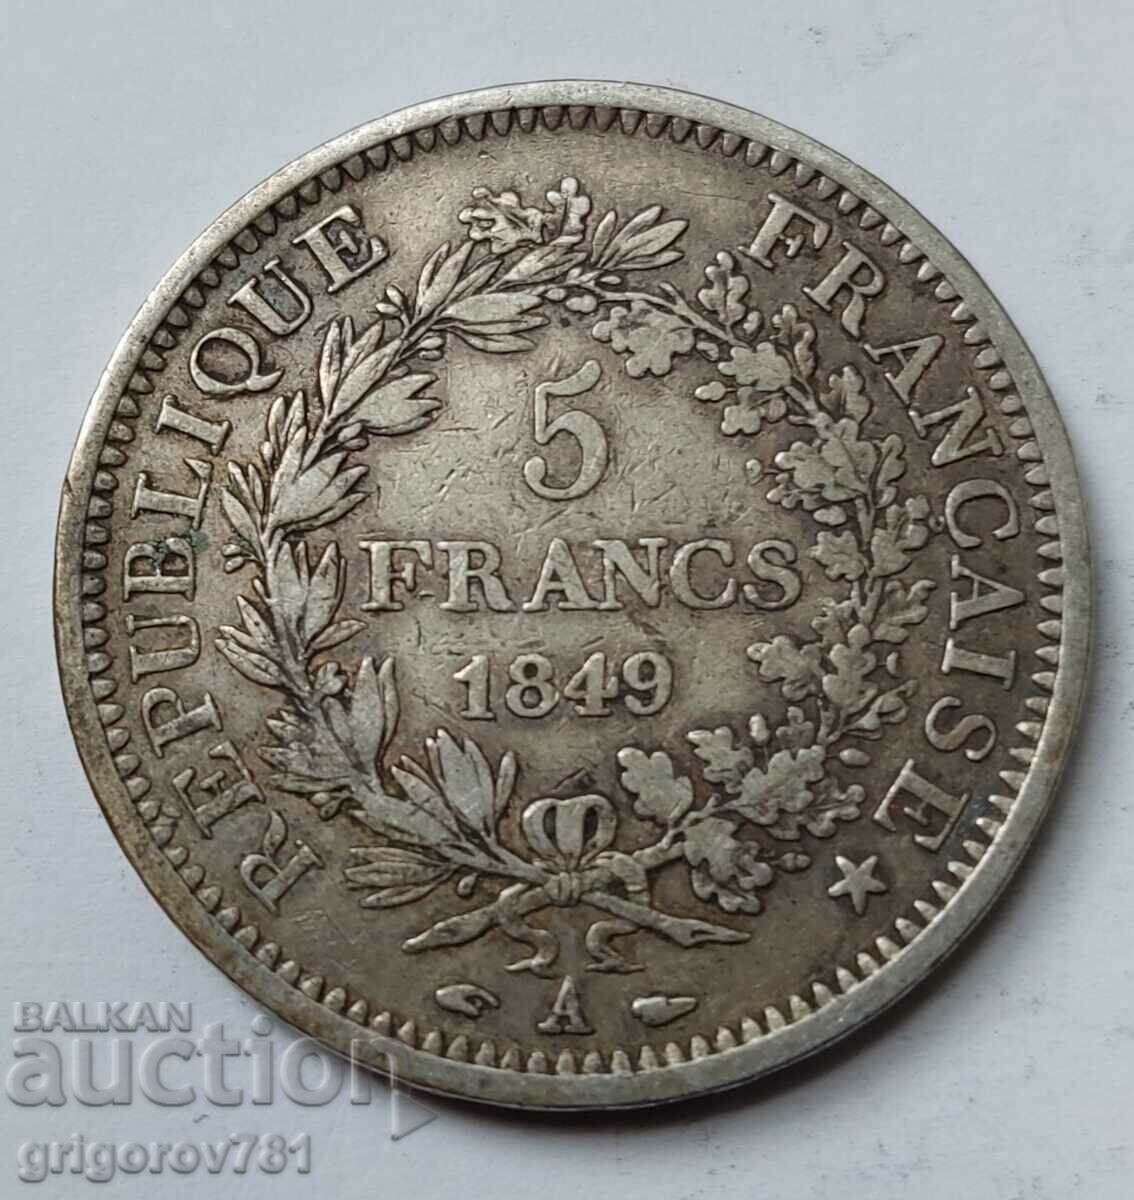 5 Francs Silver France 1849 A - Silver Coin #202